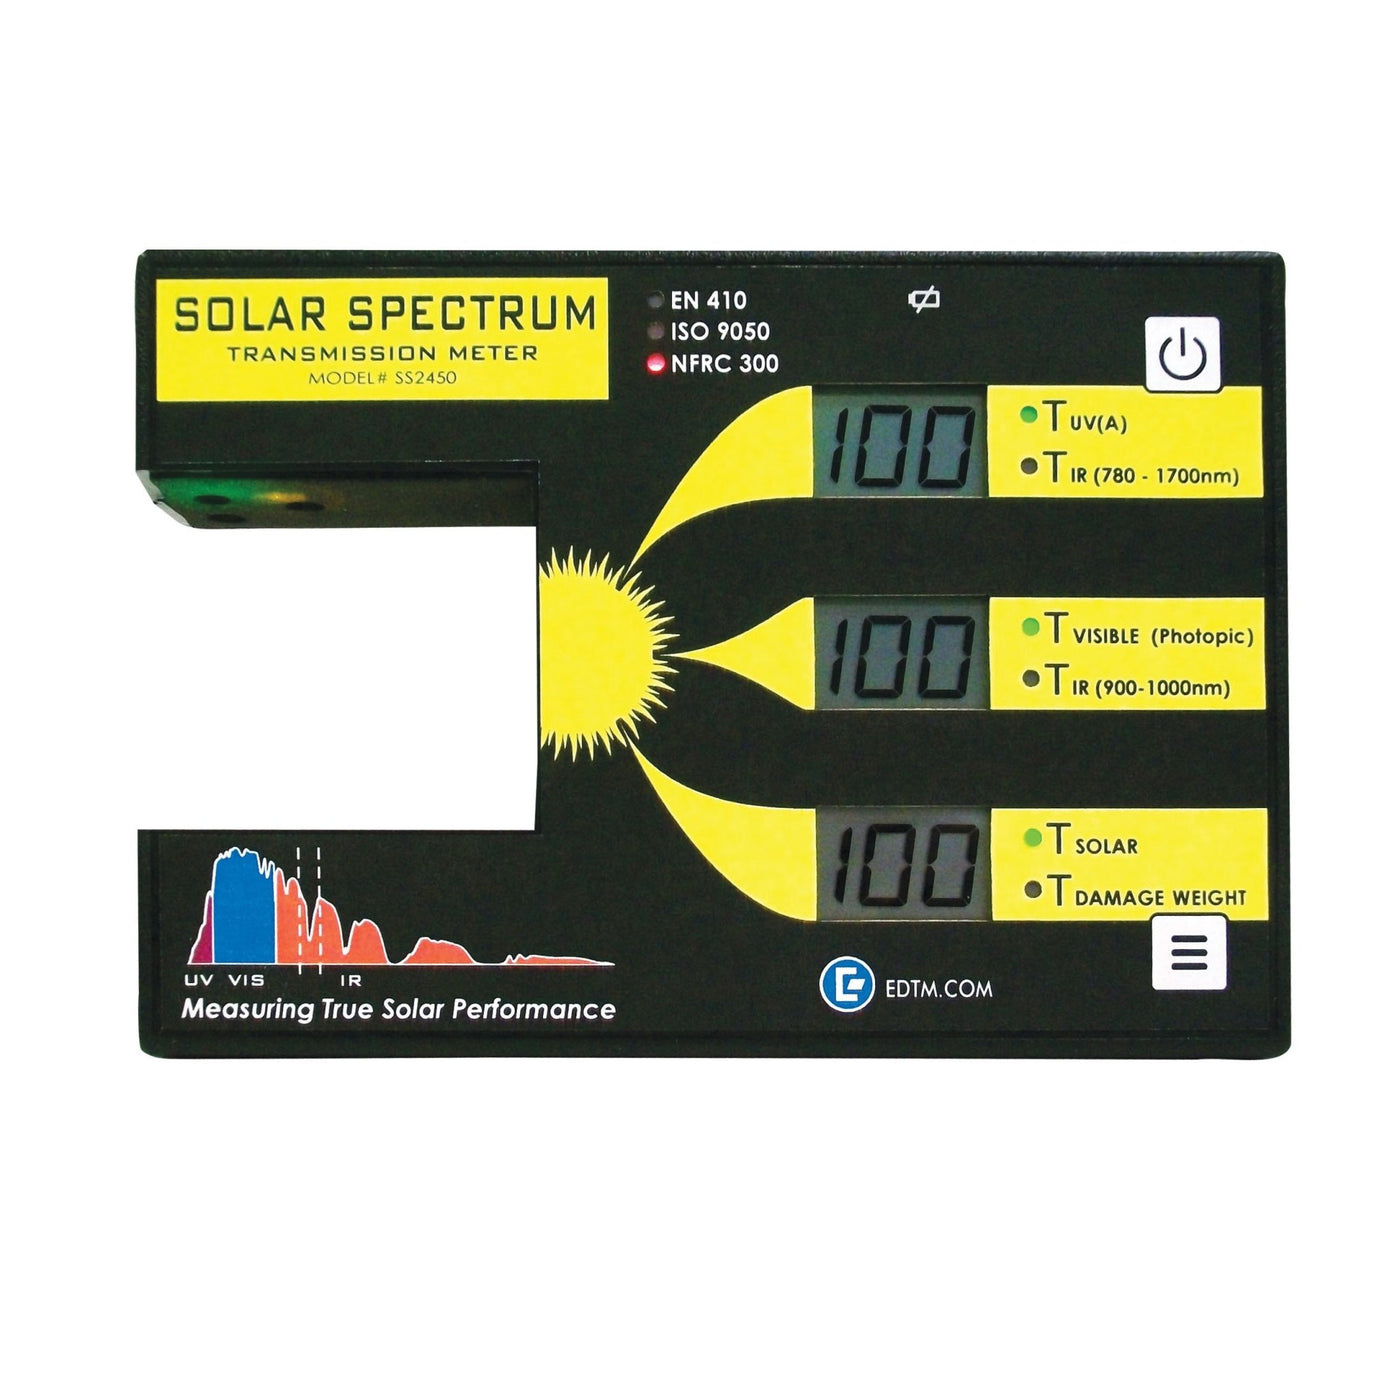 GT2034 - SS2450 Solar Spectrum Transmission Meter - Flexfilm